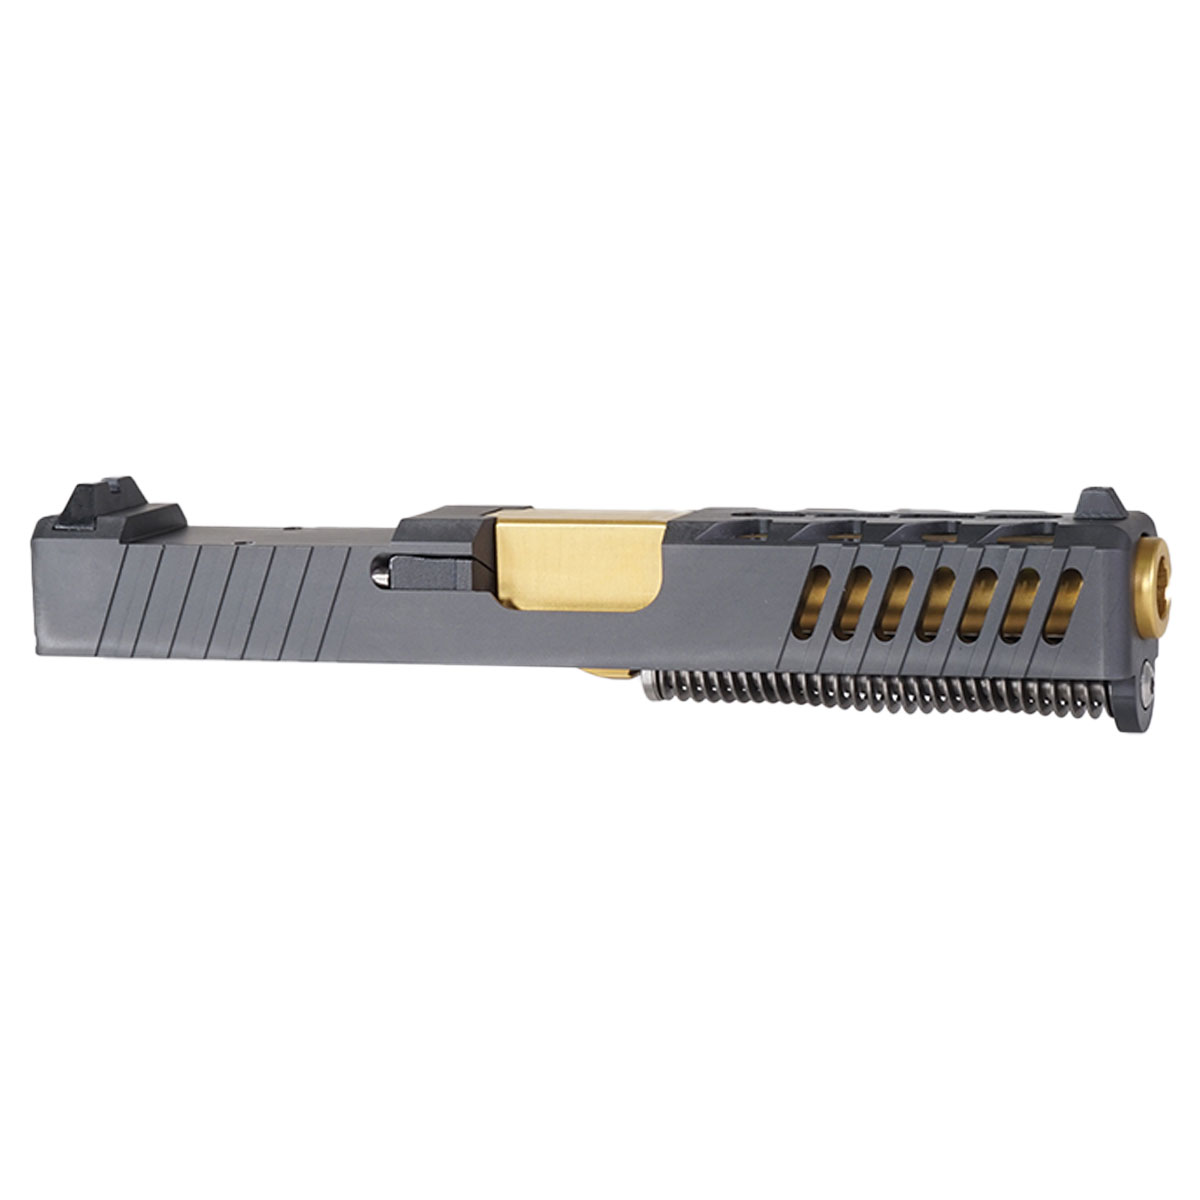 DTT 'Industrialist Revolution' 9mm Complete Slide Kit - Glock 19 Gen 1-3 Compatible